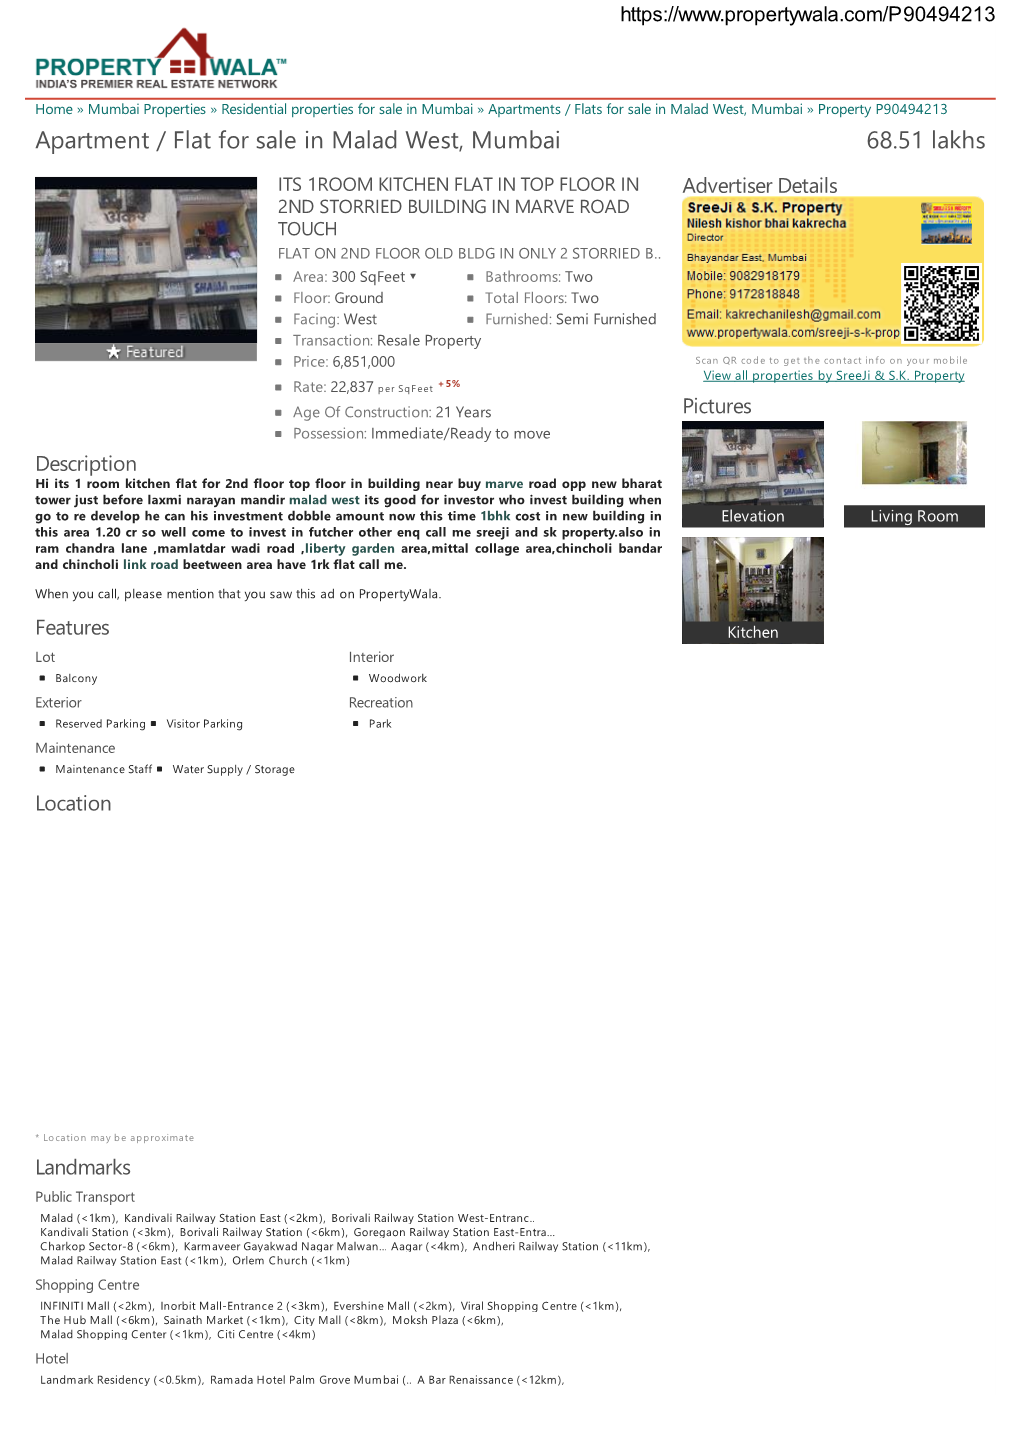 Apartment / Flat for Sale in Malad West, Mumbai (P90494213)